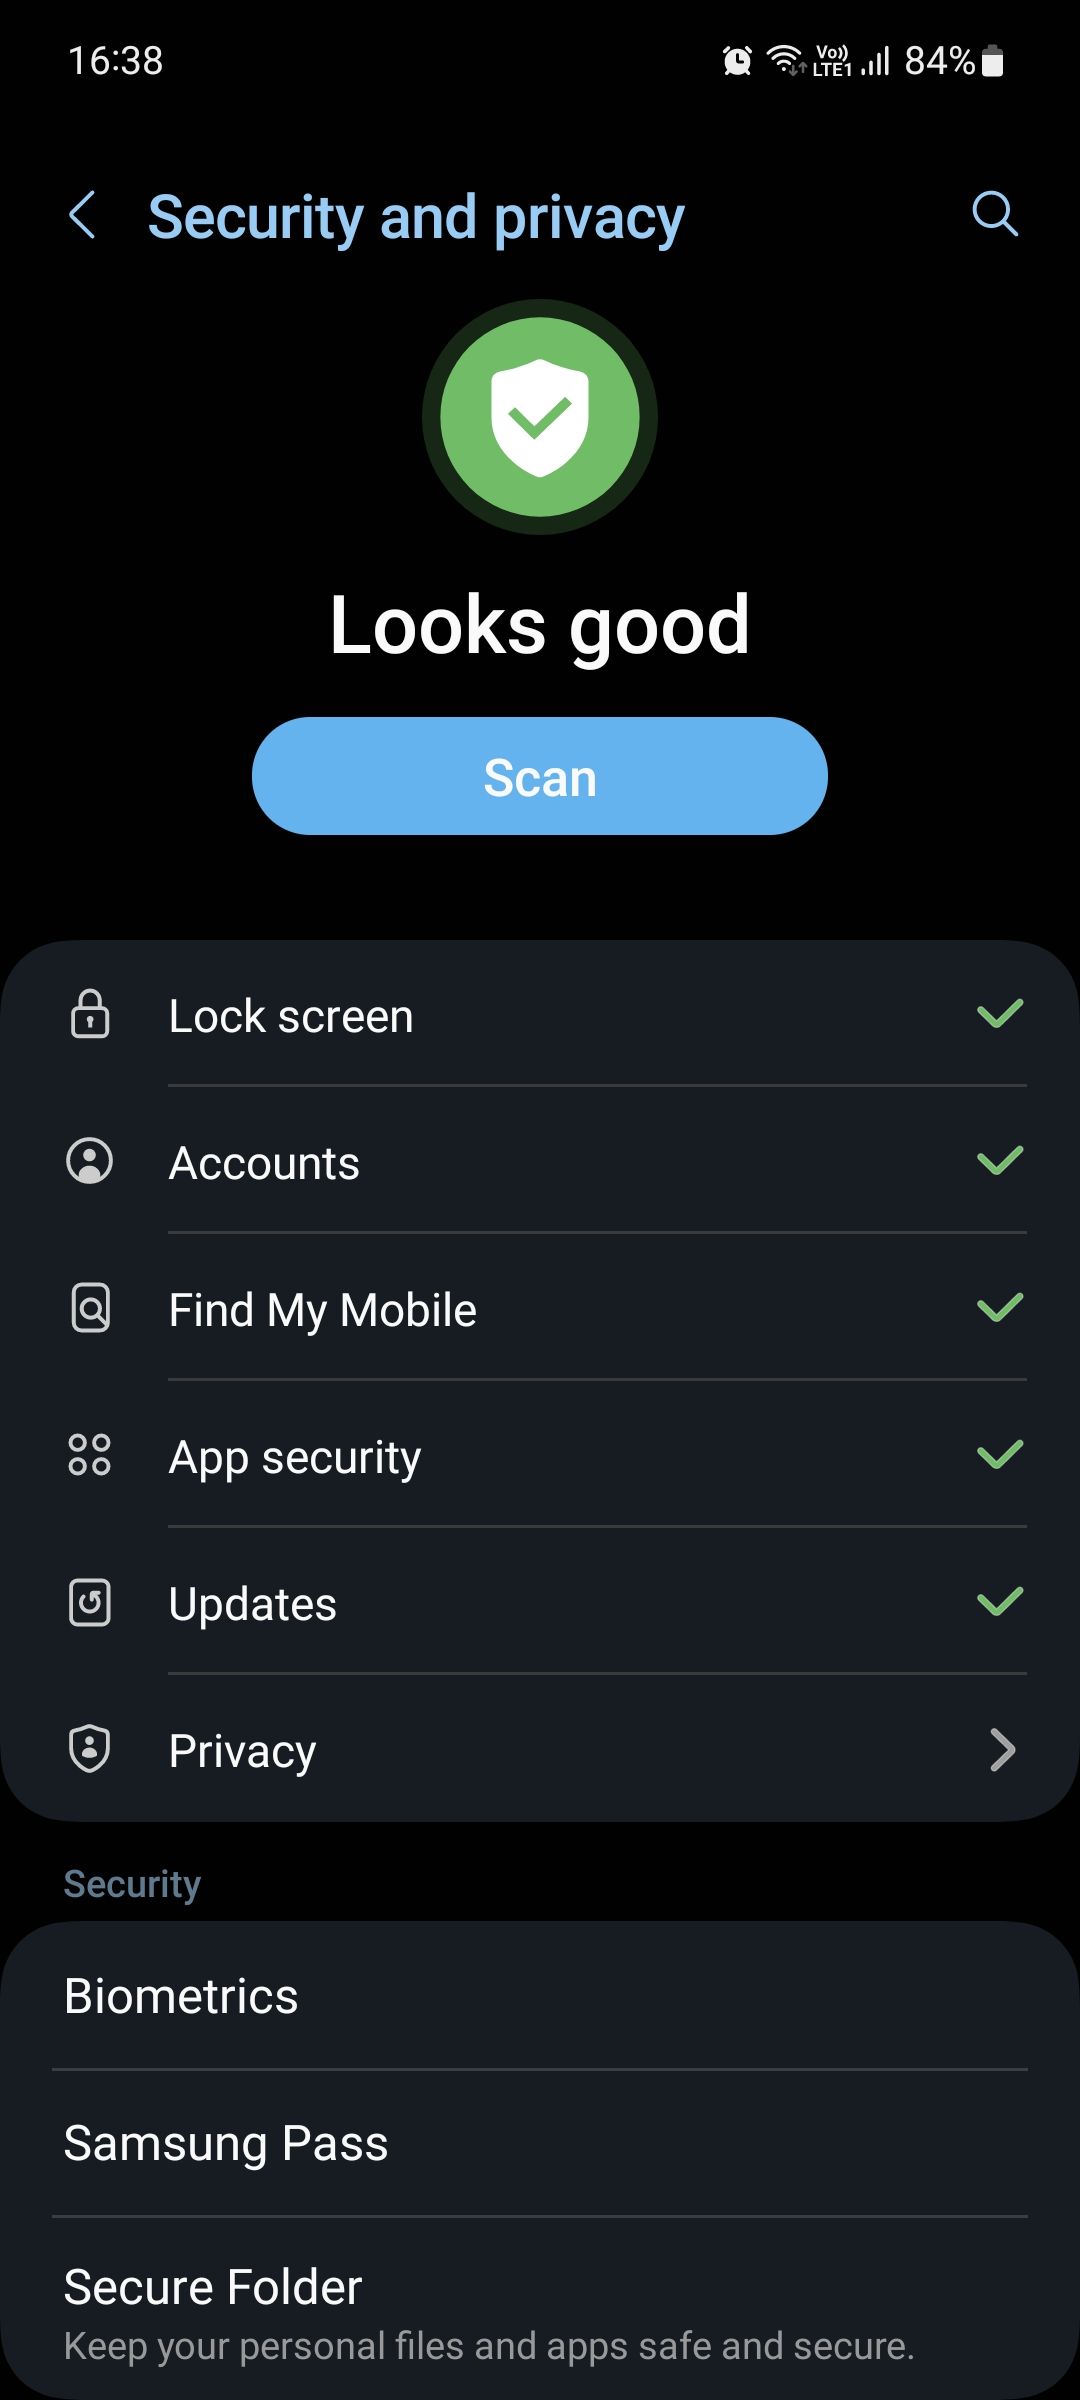 Samsung One UI 5 Security and privacy menu